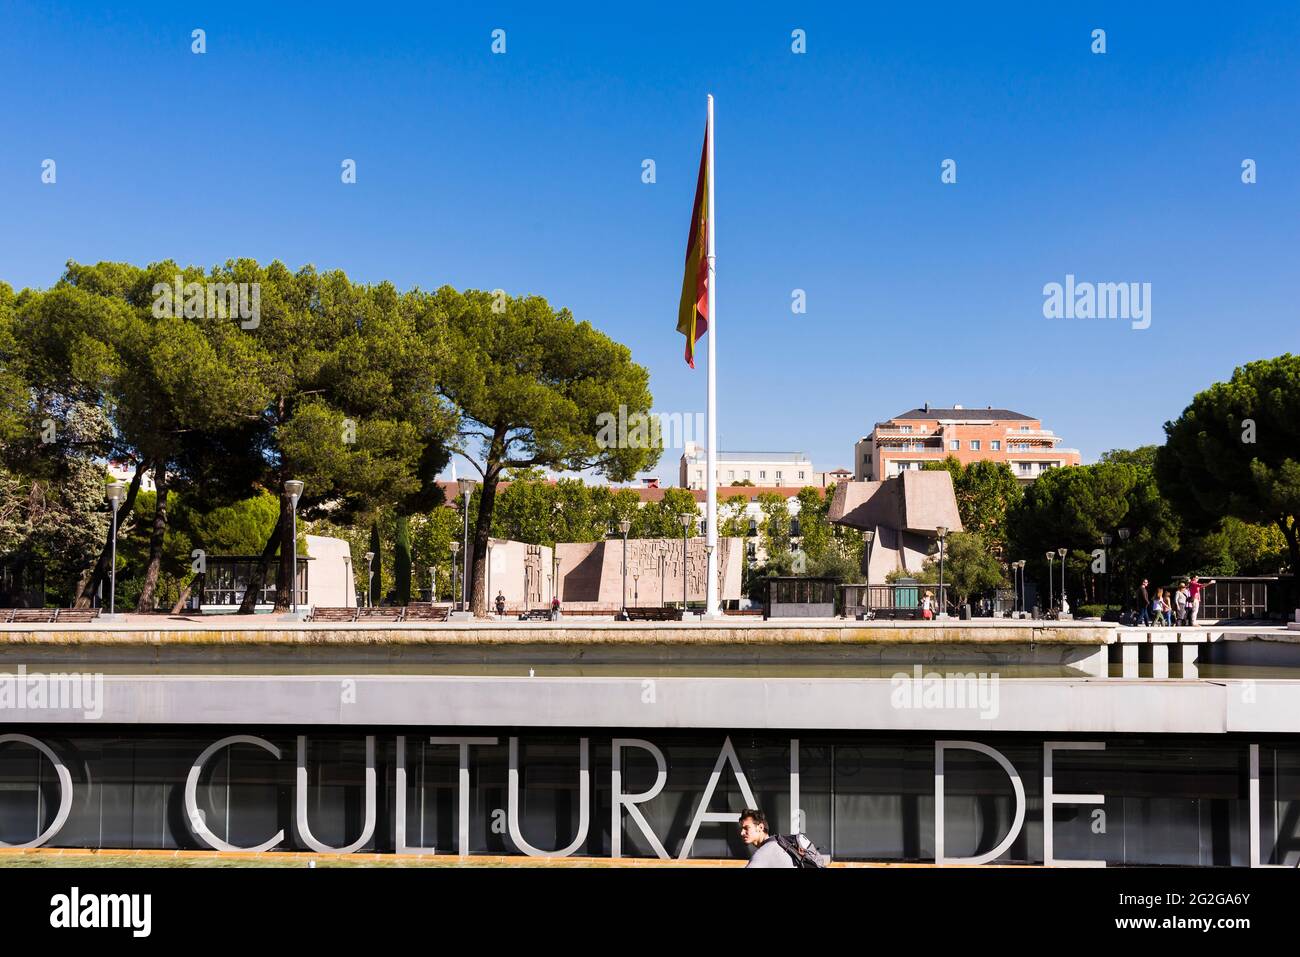 Partial view of the Plaza de Colon with the Centro Cultural de la Villa de Madrid below. Madrid, Comunidad de Madrid, Spain, Europe Stock Photo